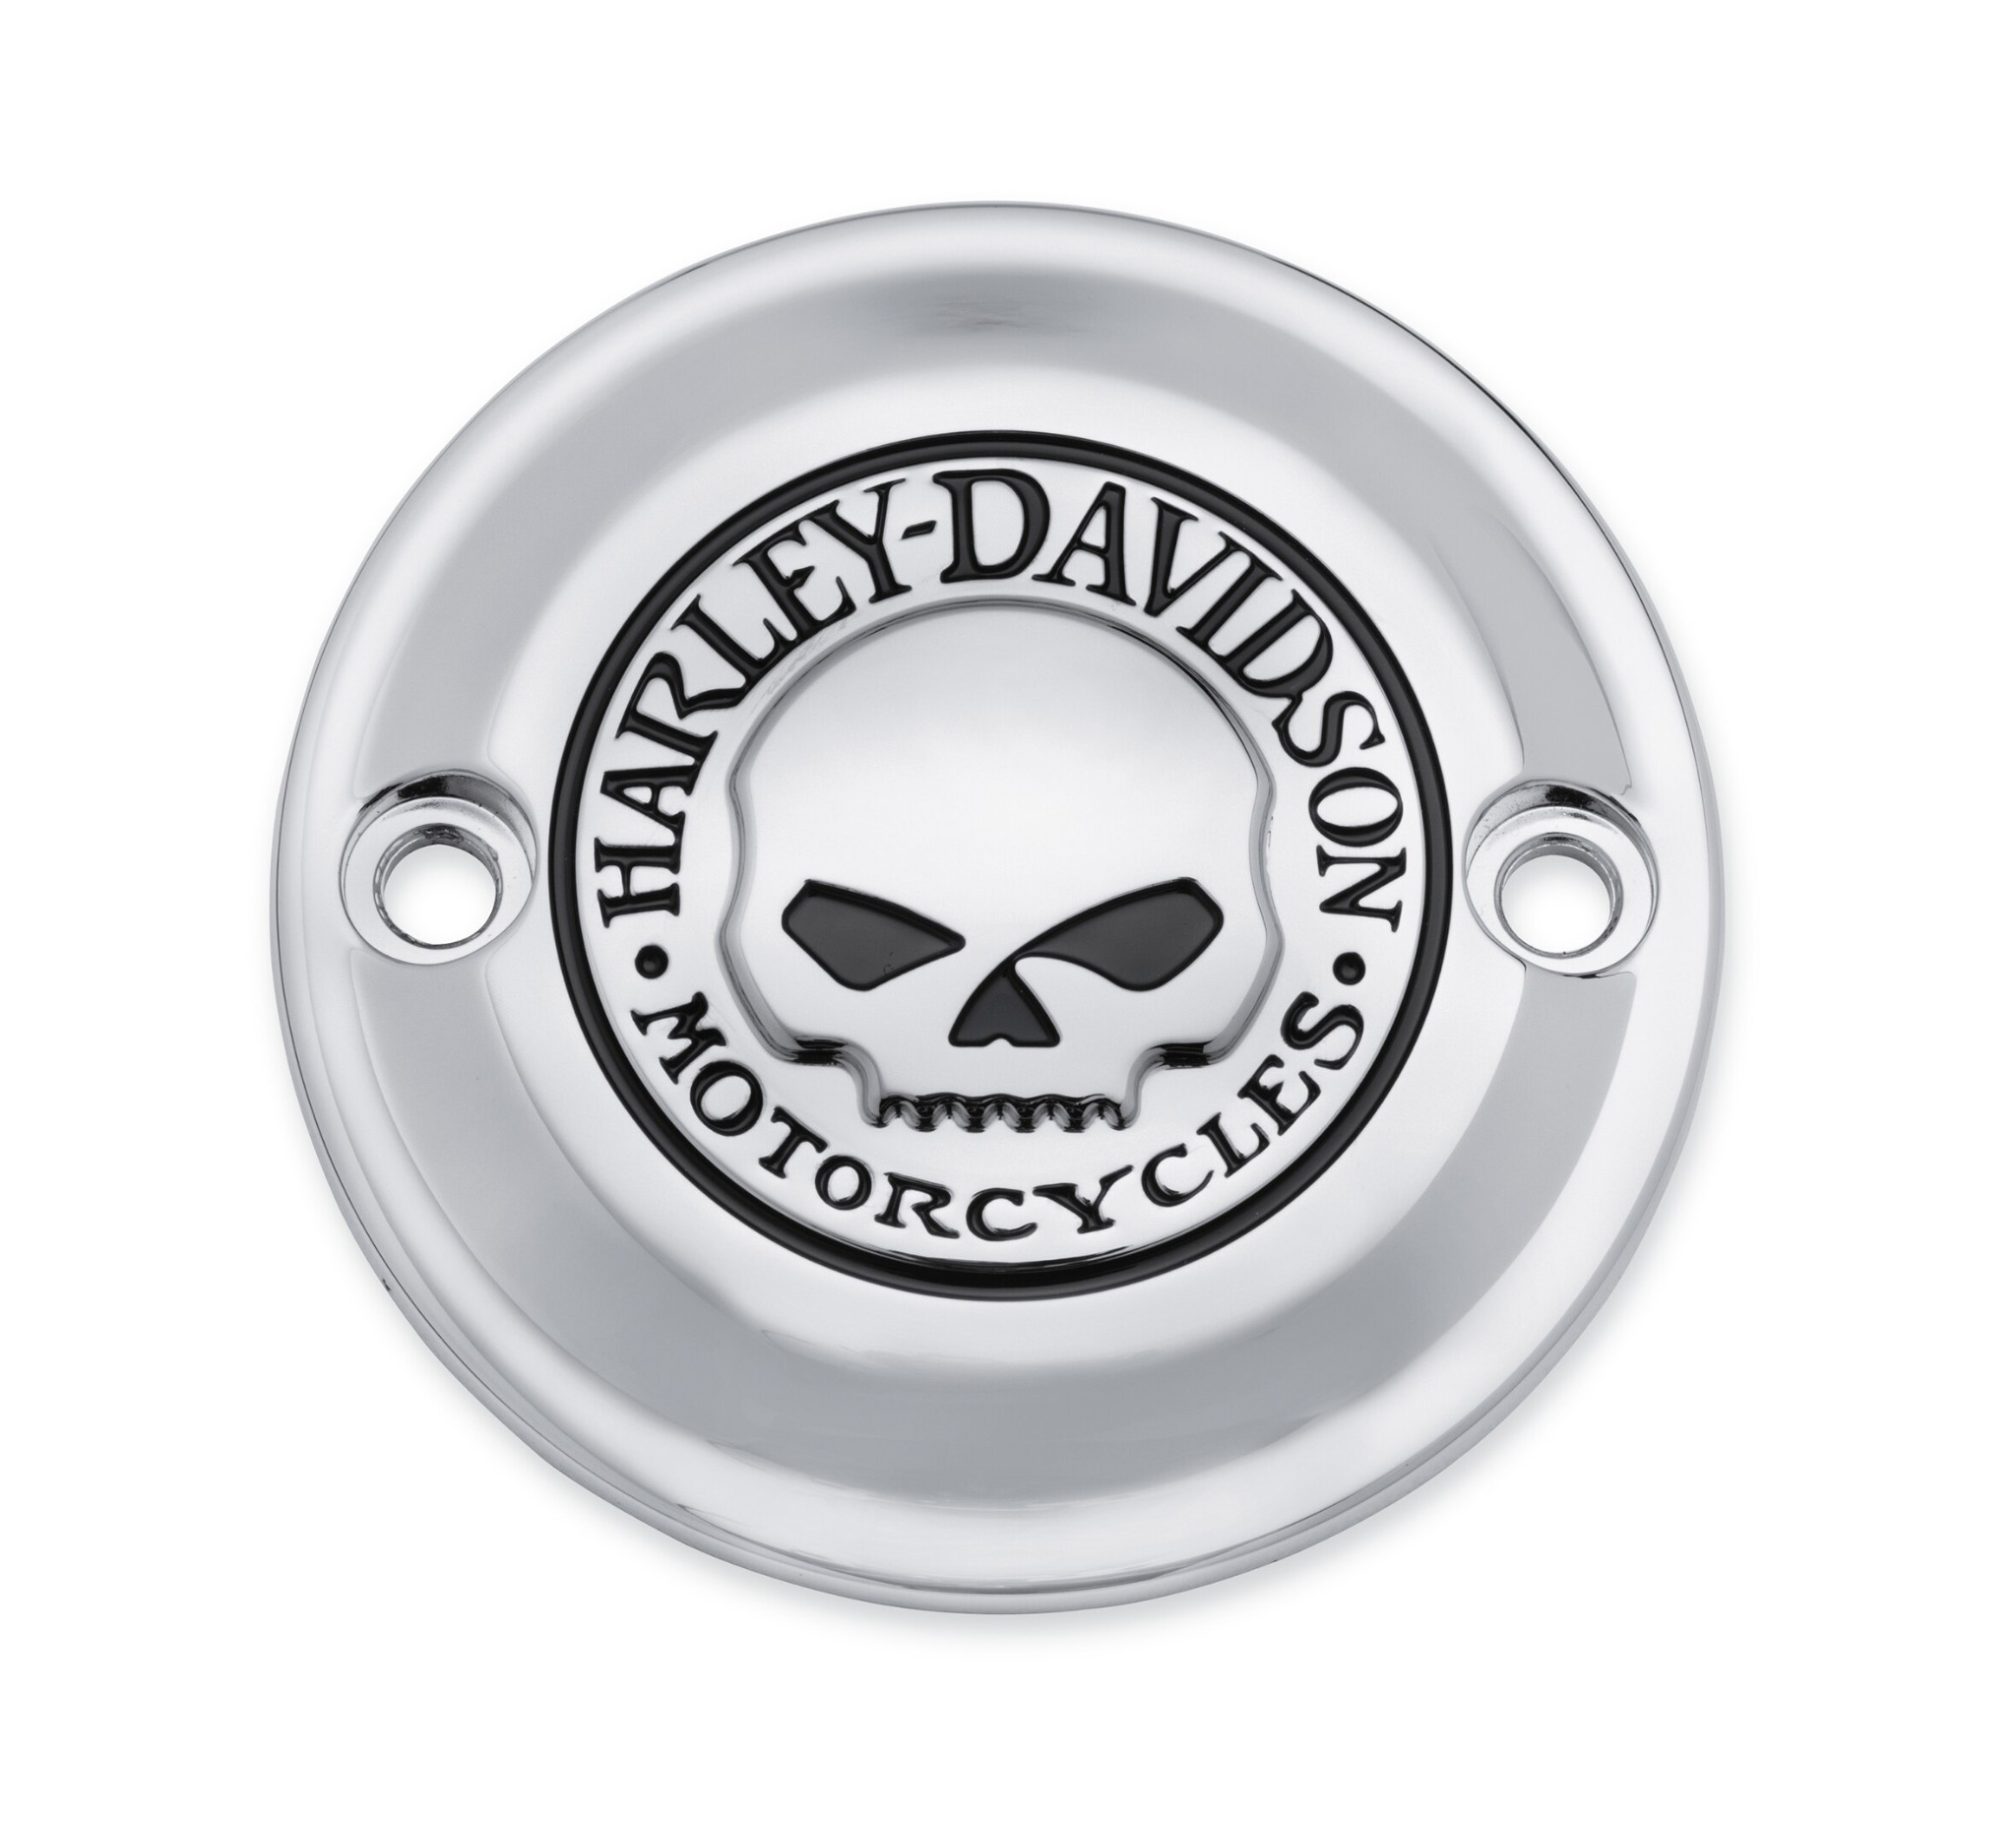 Купить крышку зажигания. Harley Davidson Willie g Skull. Крышка Harley Davidson. Крышка двигателя Harley Davidson. Willie g Harley Davidson.